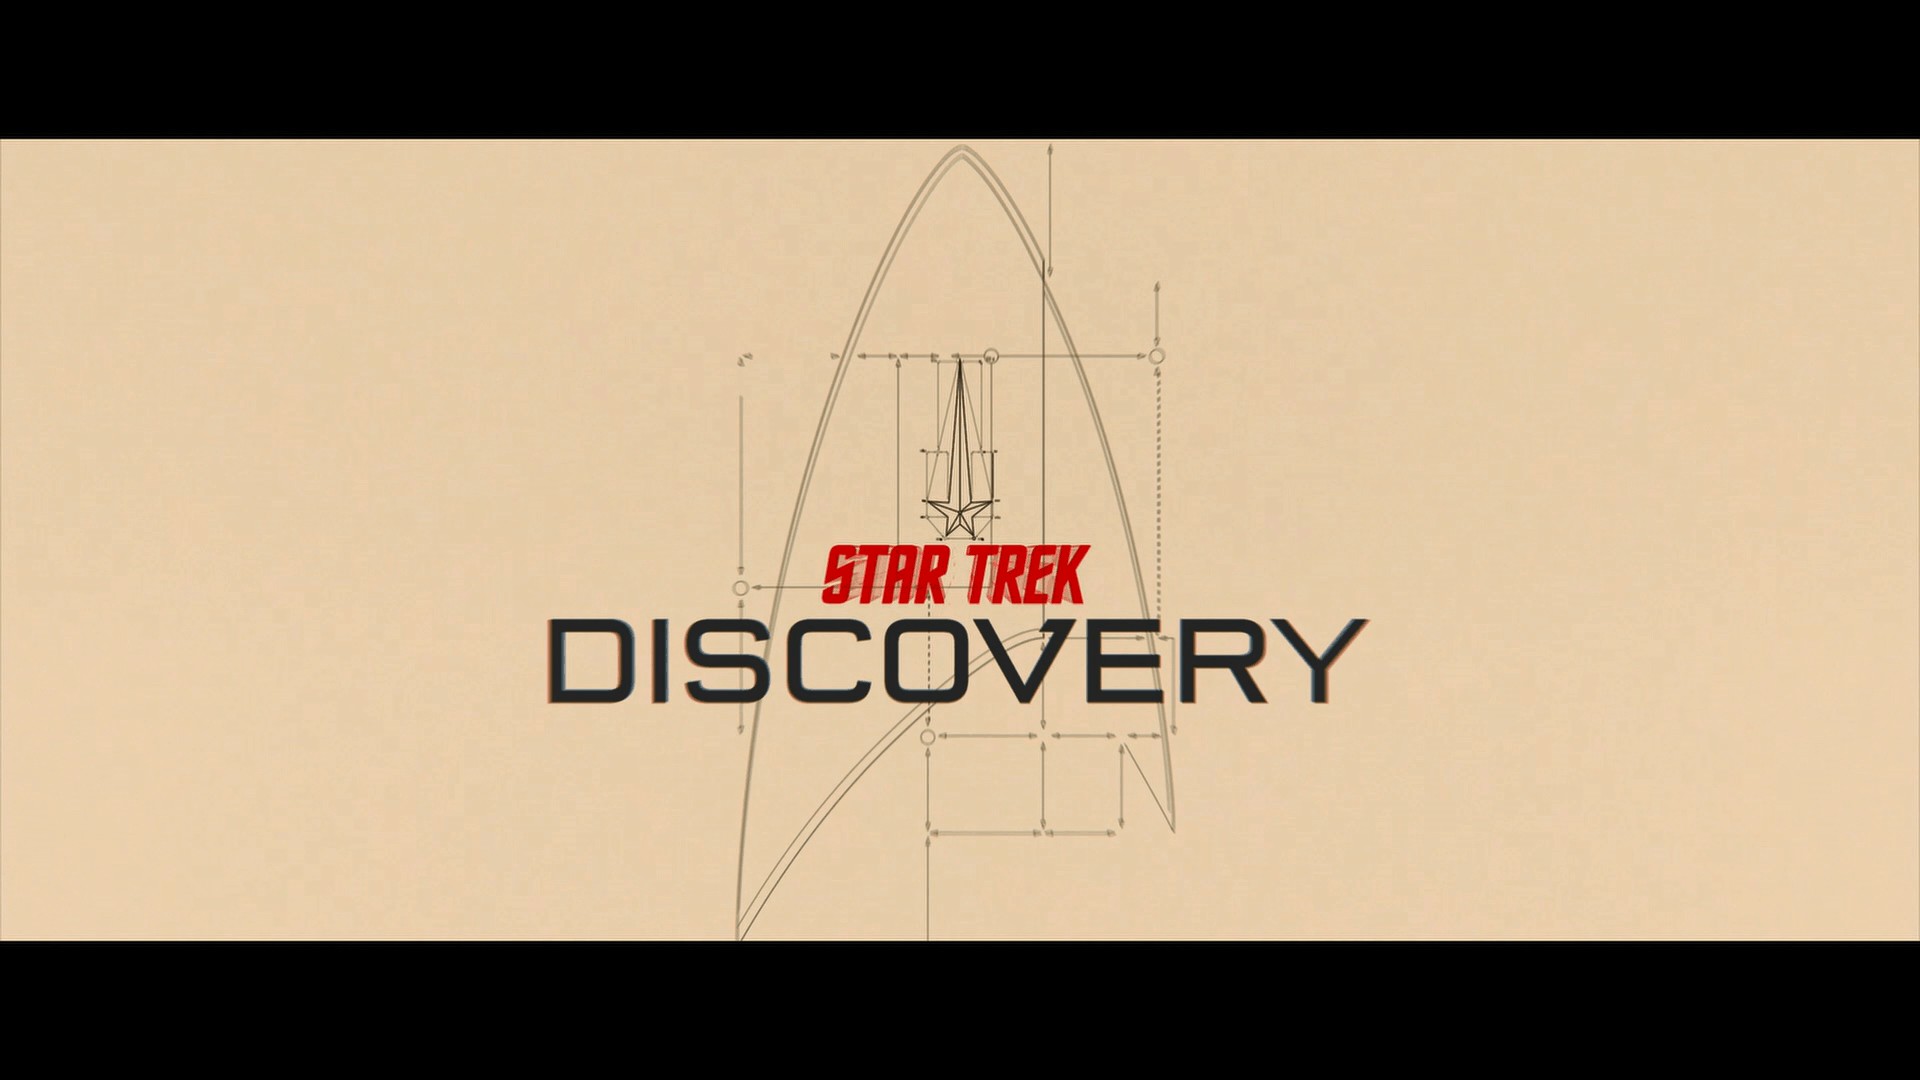 STAR TREK DISCOVERY SEASON 3 LOGO